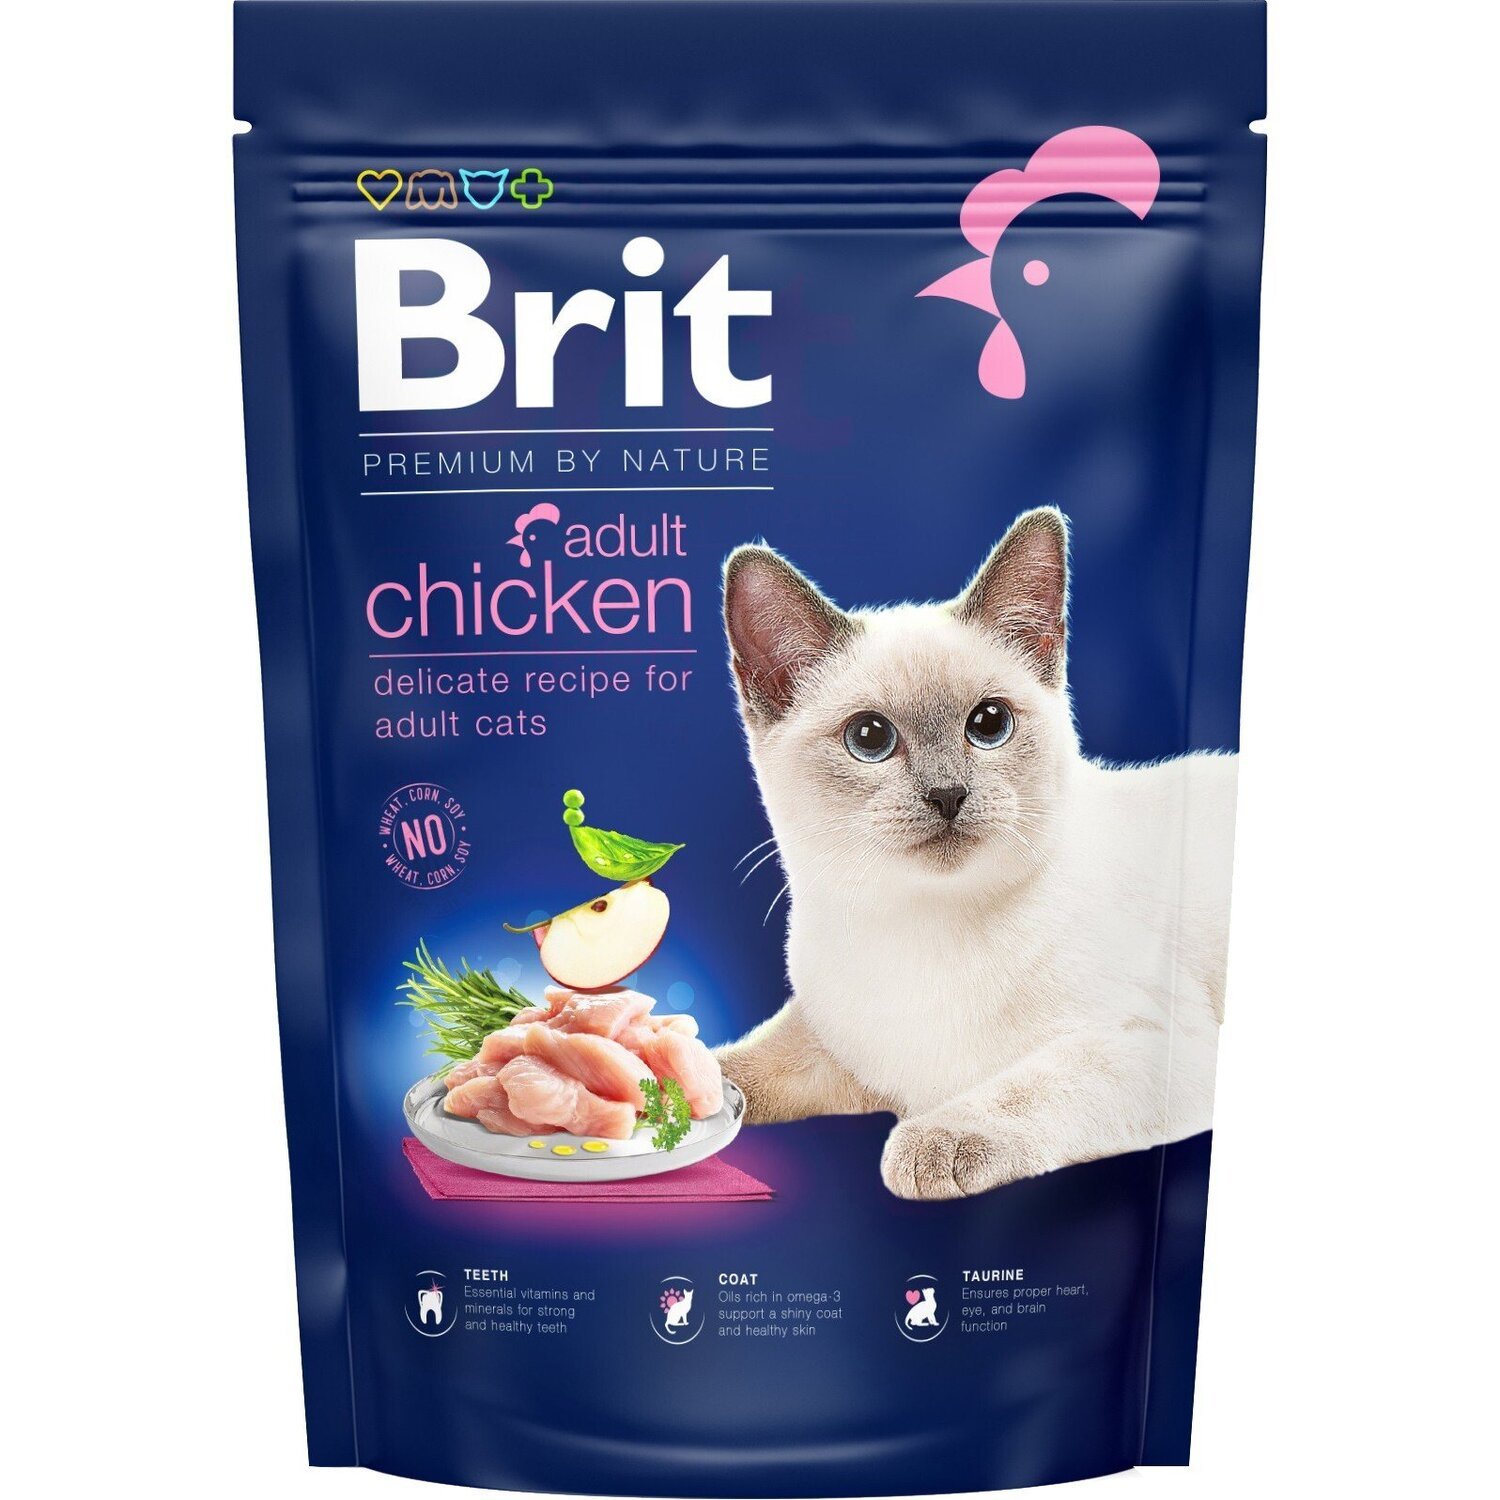 Сухой корм для взрослых кошек Brit Premium by Nature Cat Adult Chicken с курицей 0,8 кг фото 